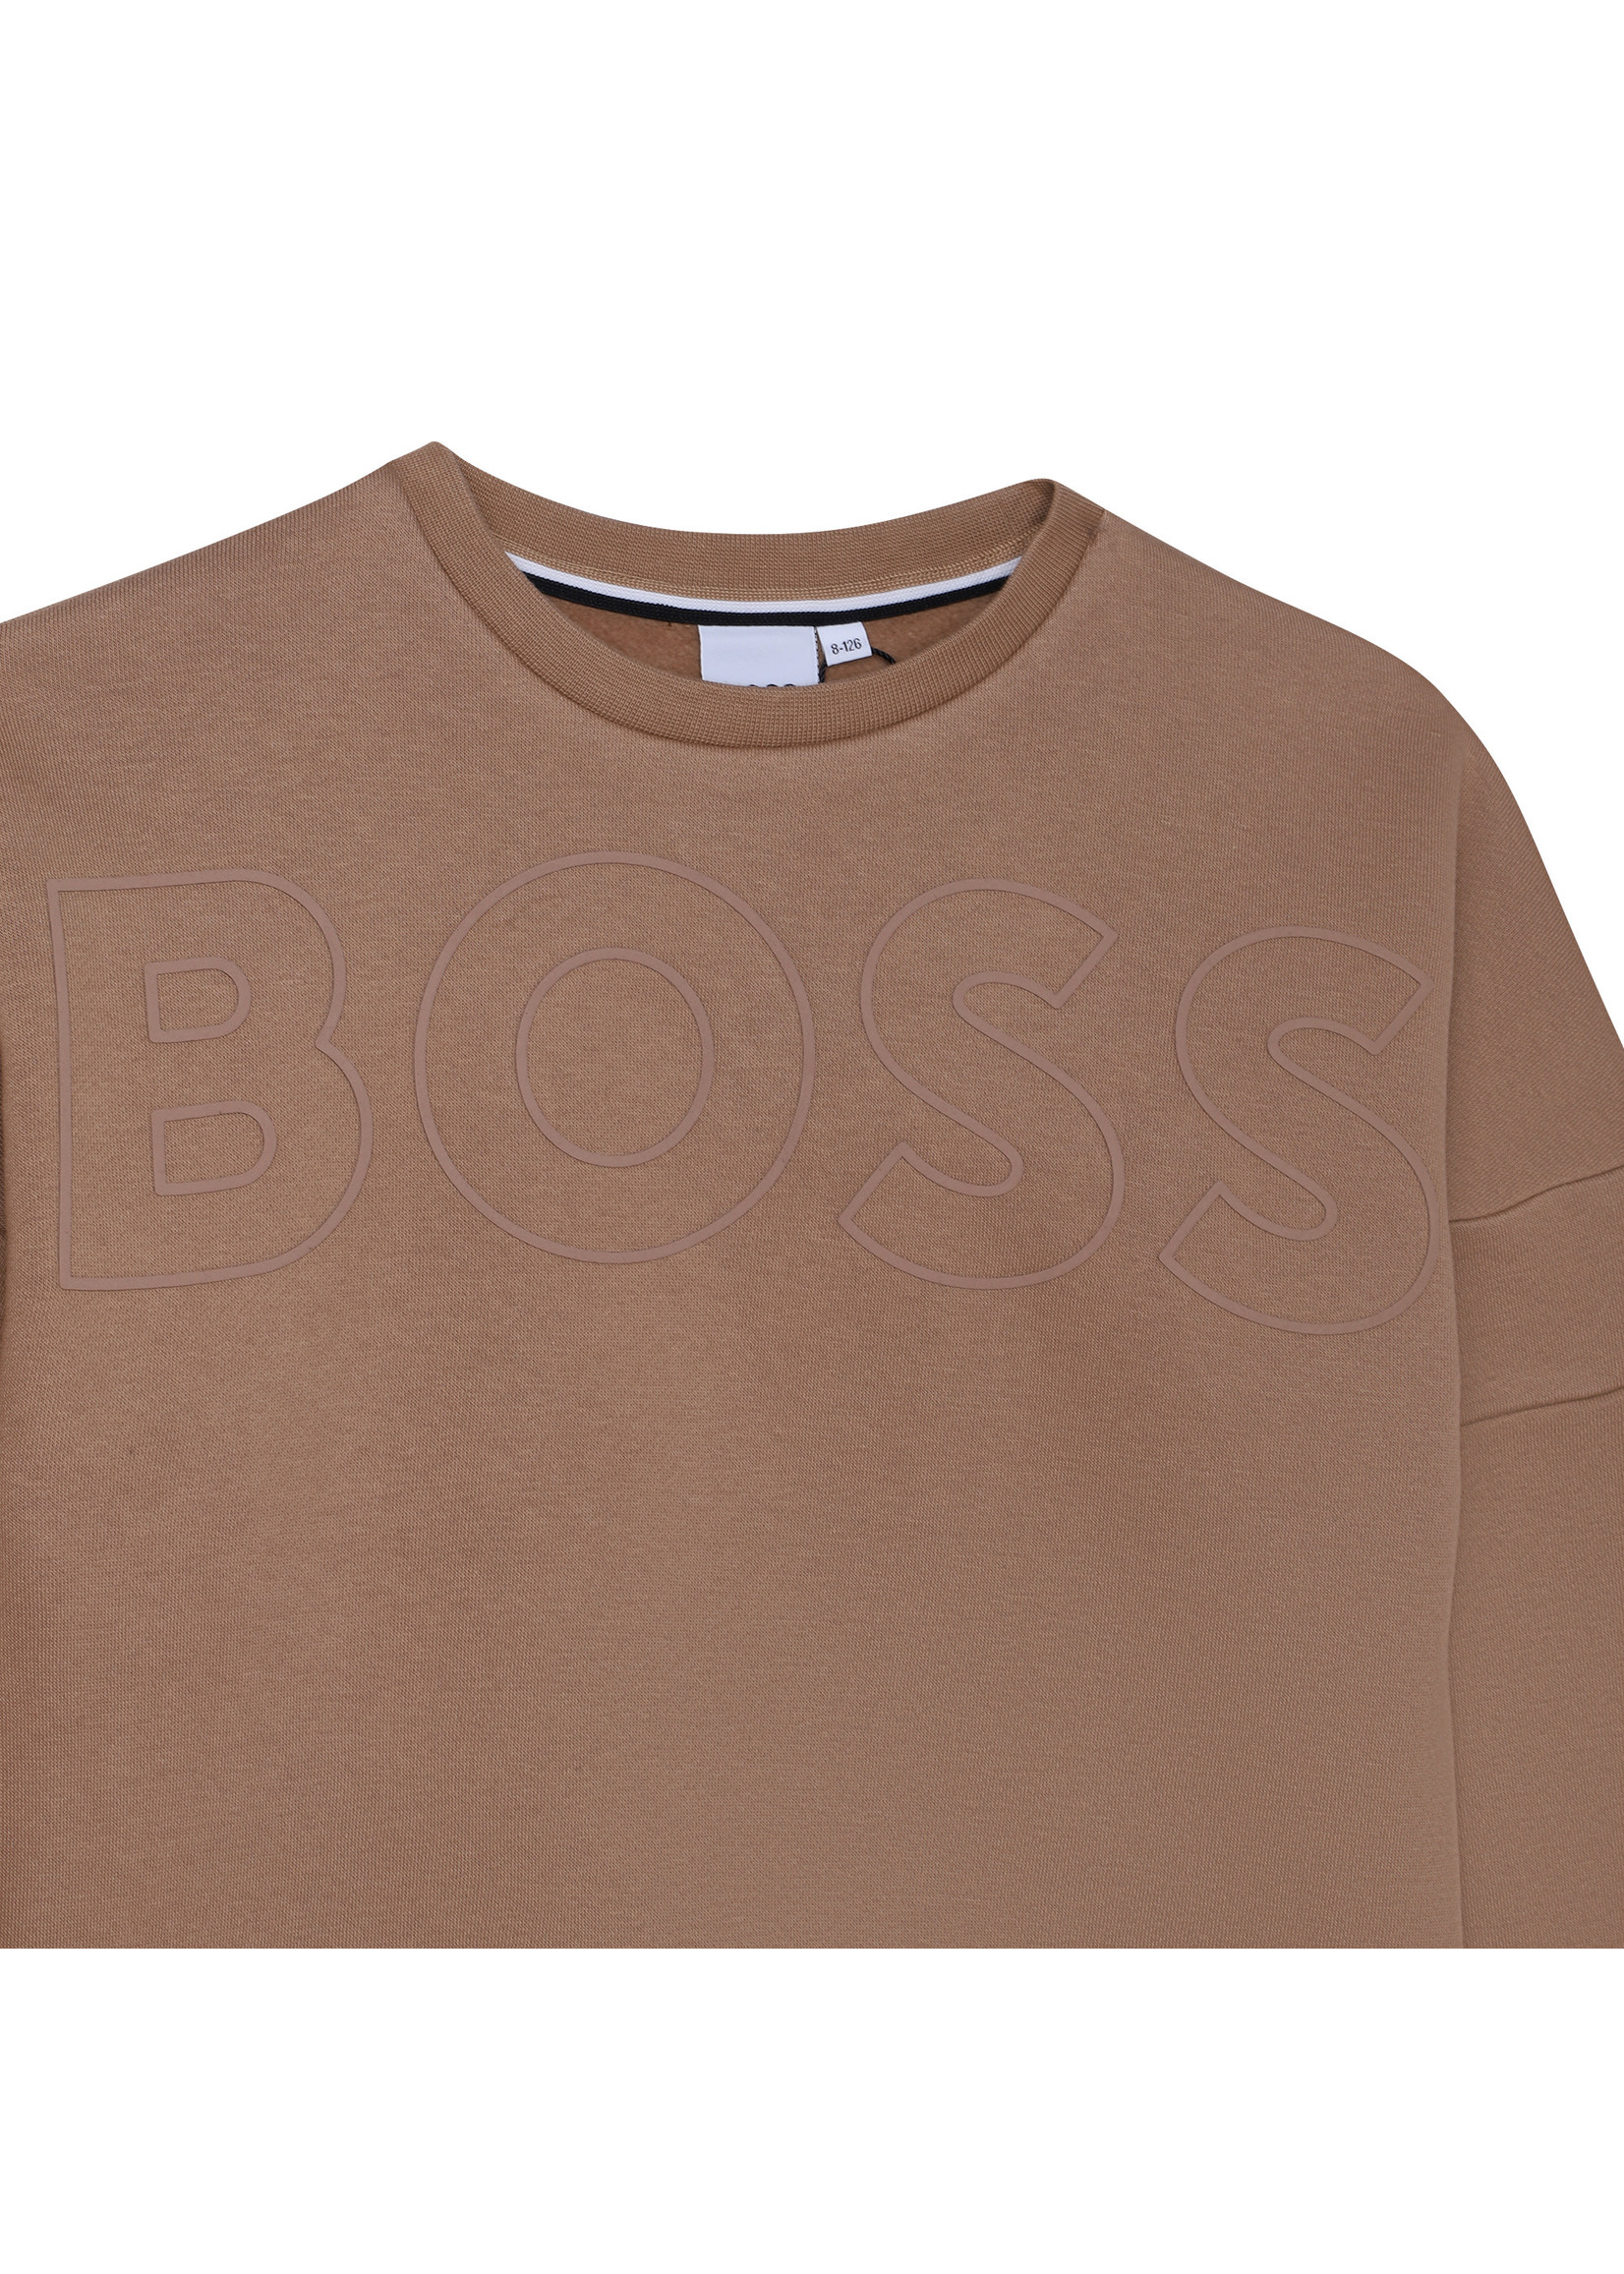 BOSS BOSS Boy crewneck sweater beige - J25M65